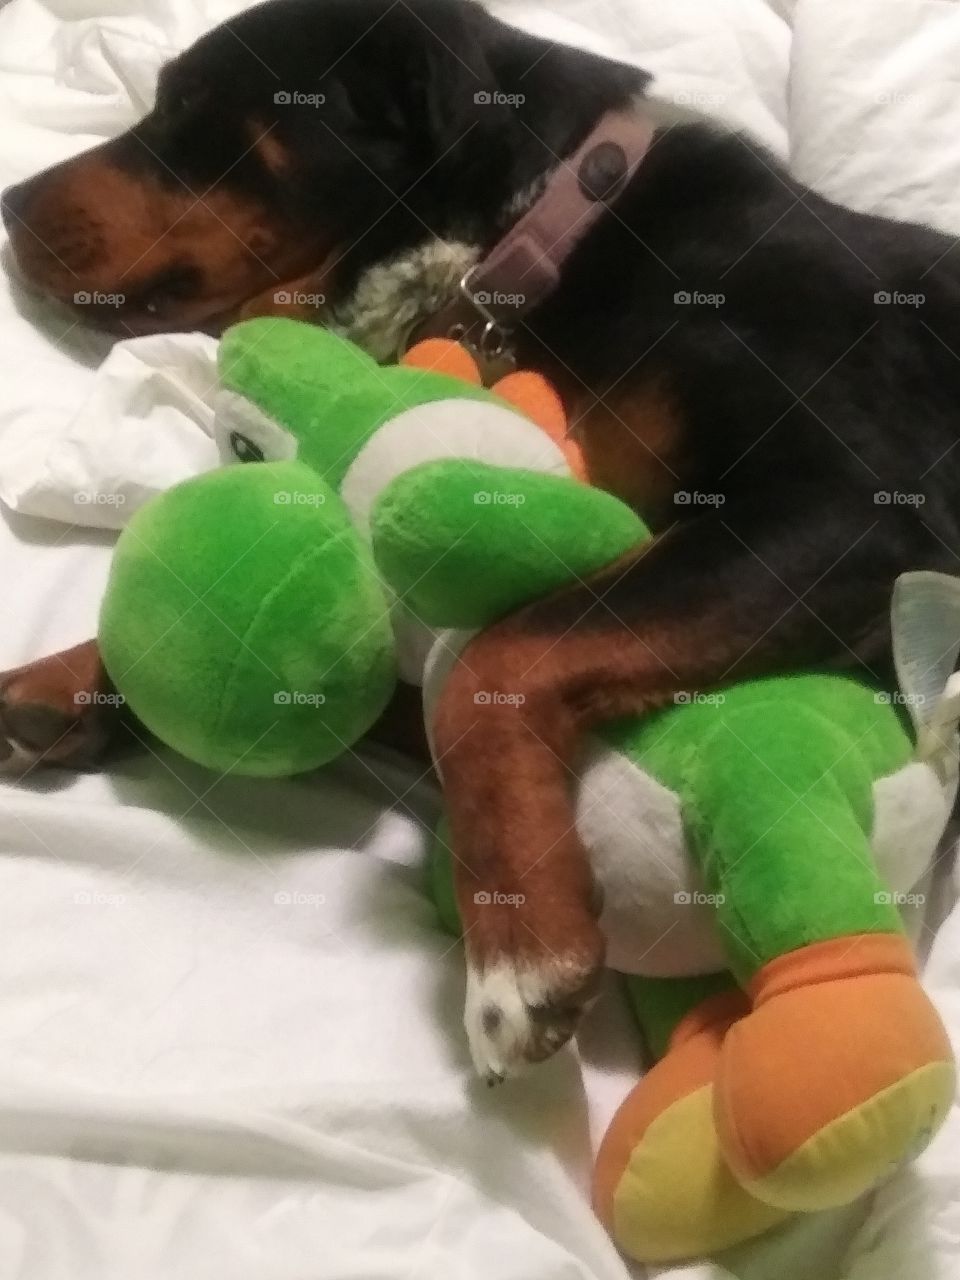 puppy cuddling her yoshi stuffed animal